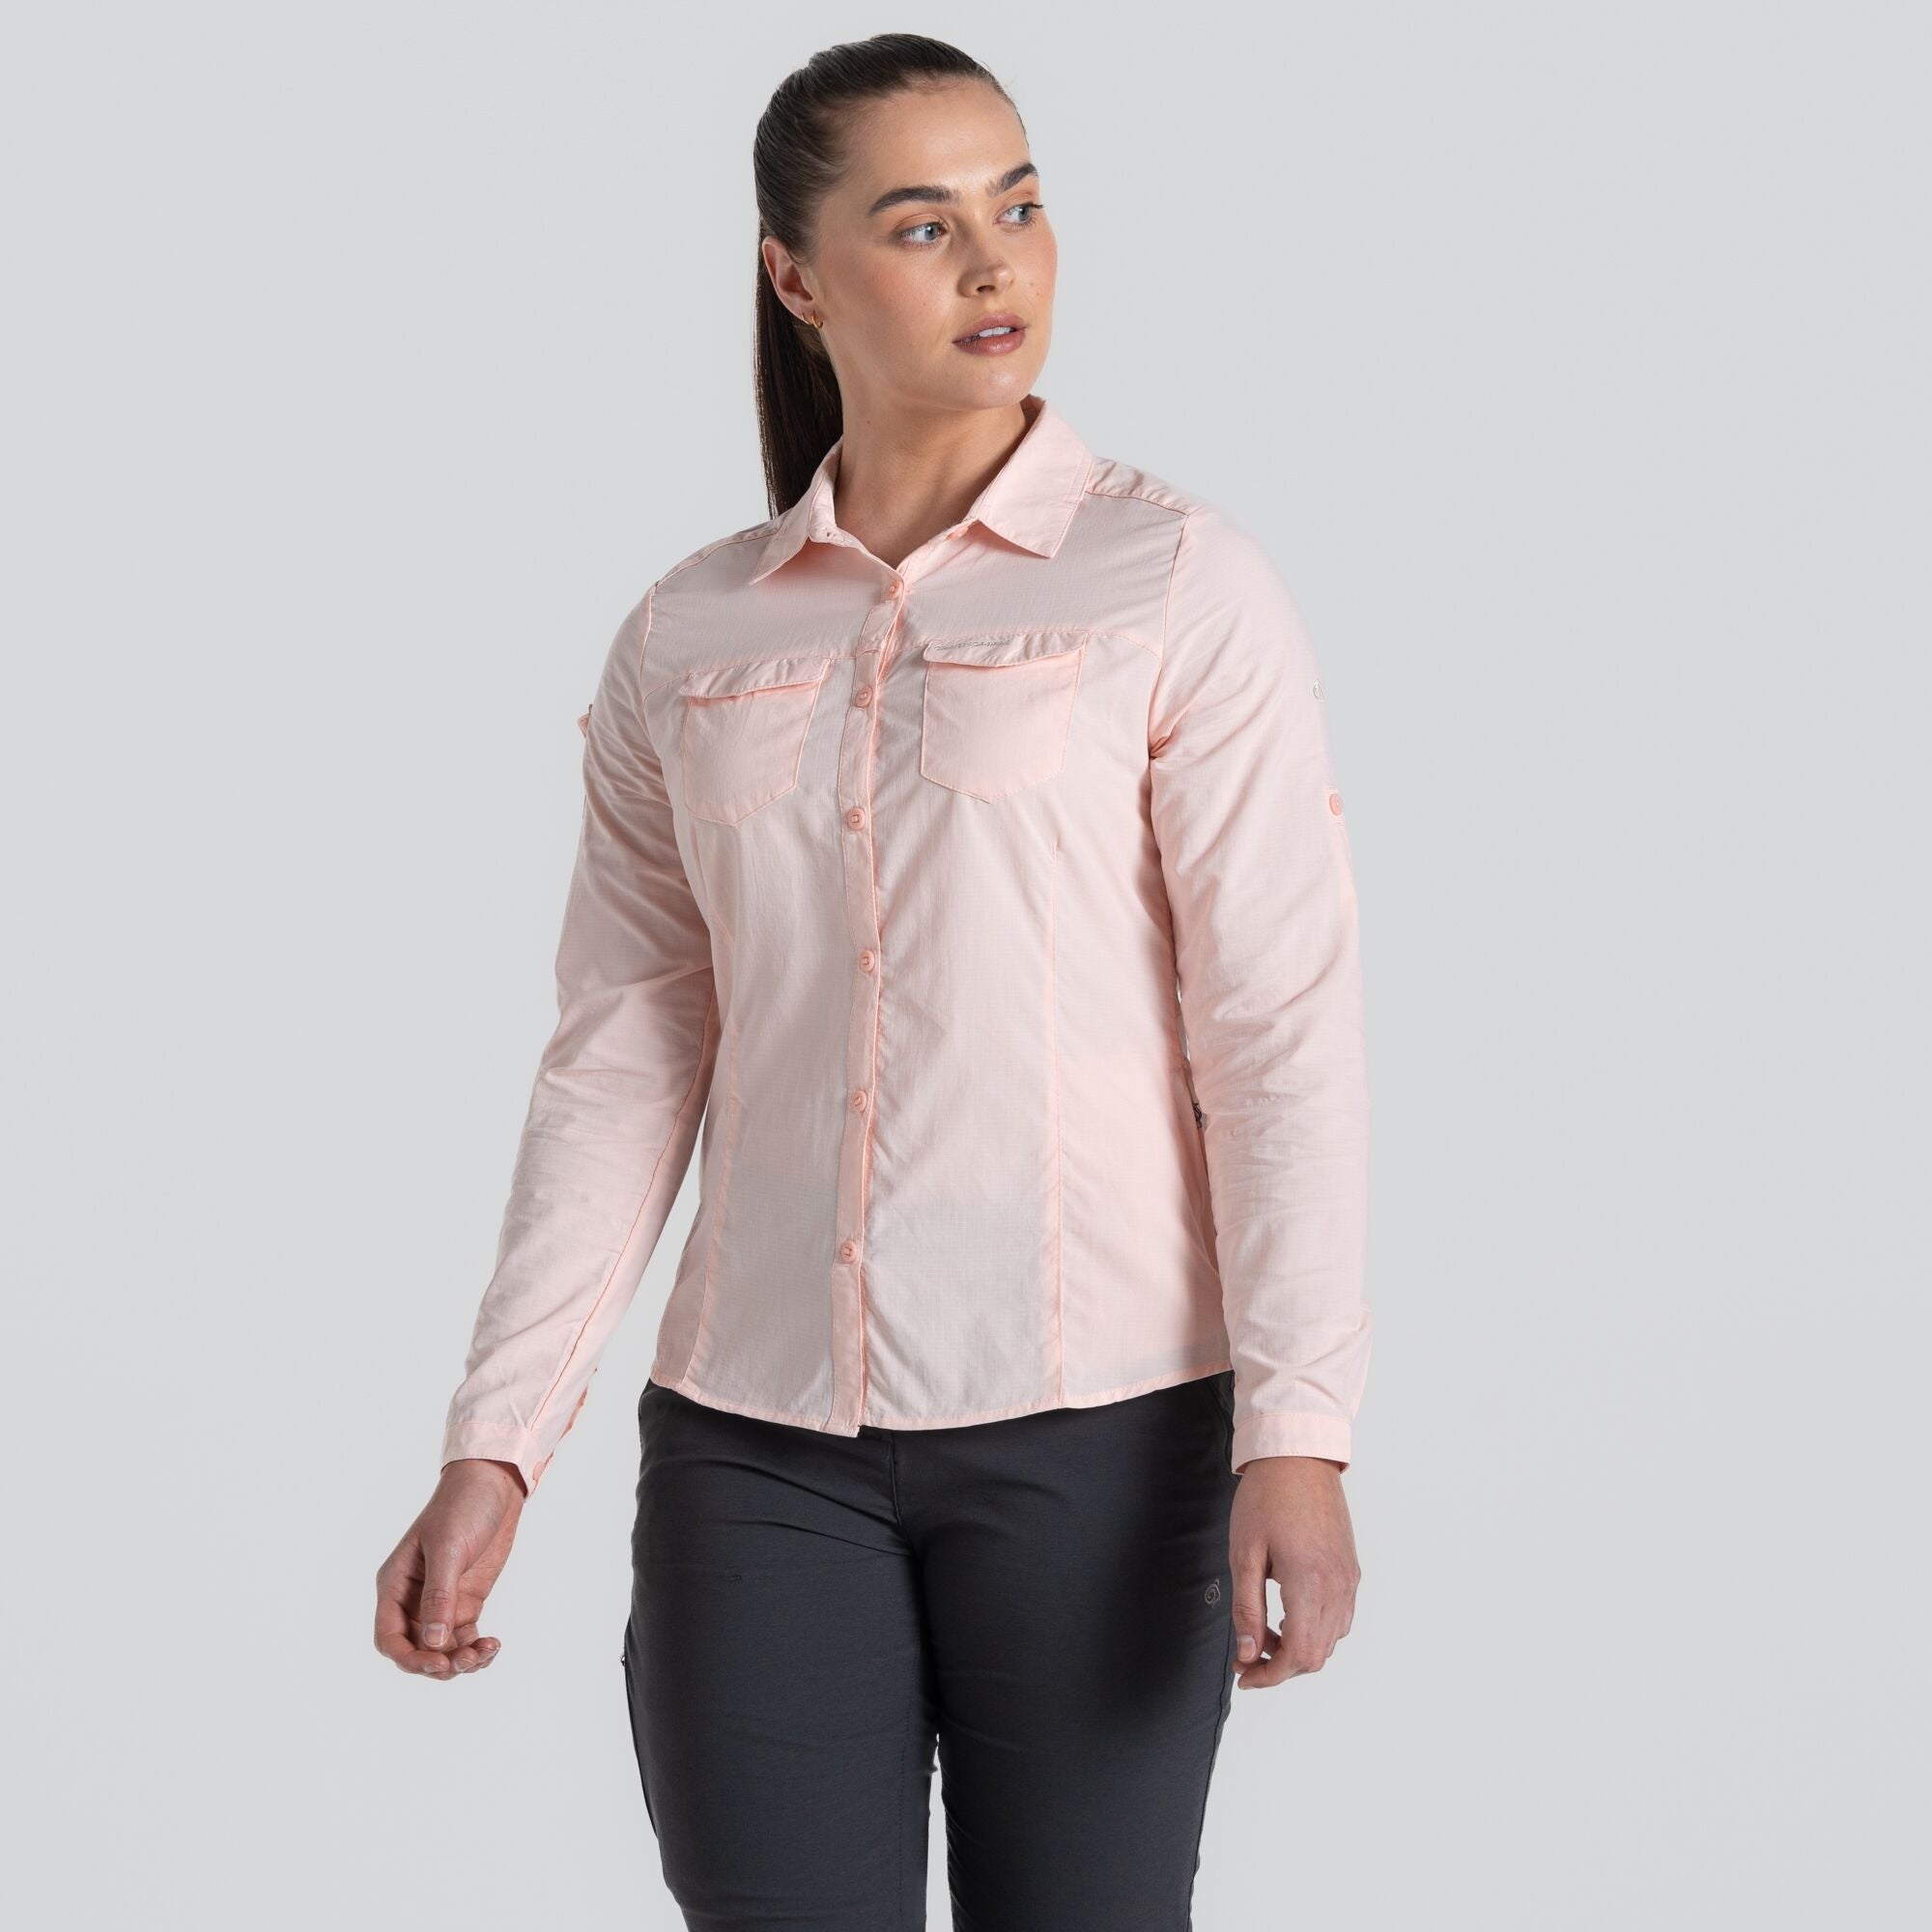 Women's Insect Shield® Adventure II Long-Sleeved Shirt | Seashell Pink